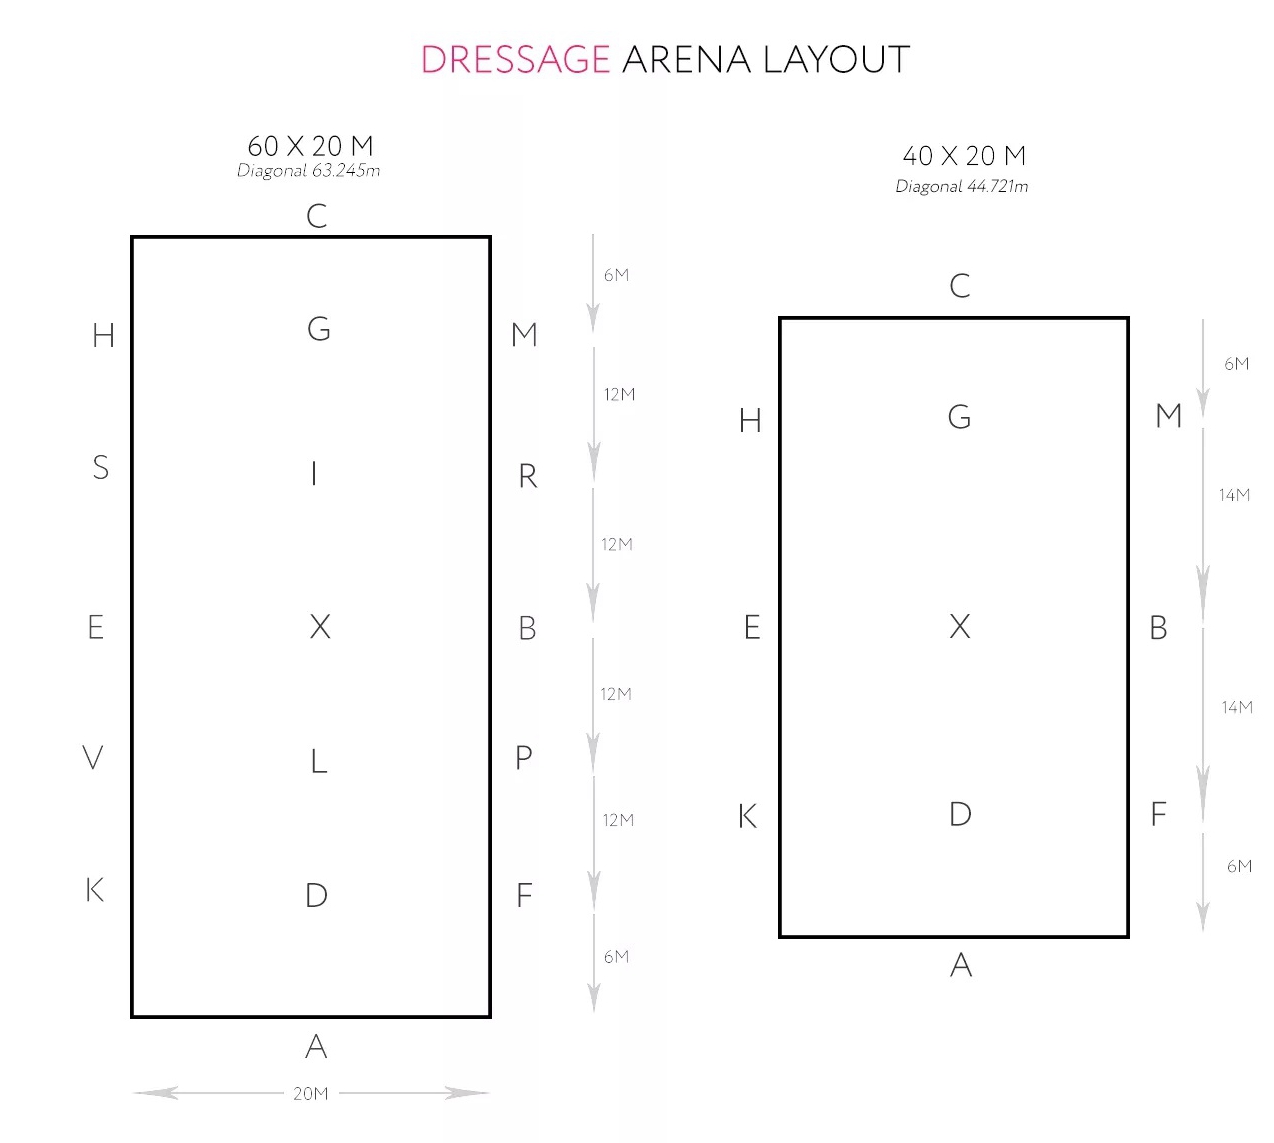 Dressage Arena Letter Layout